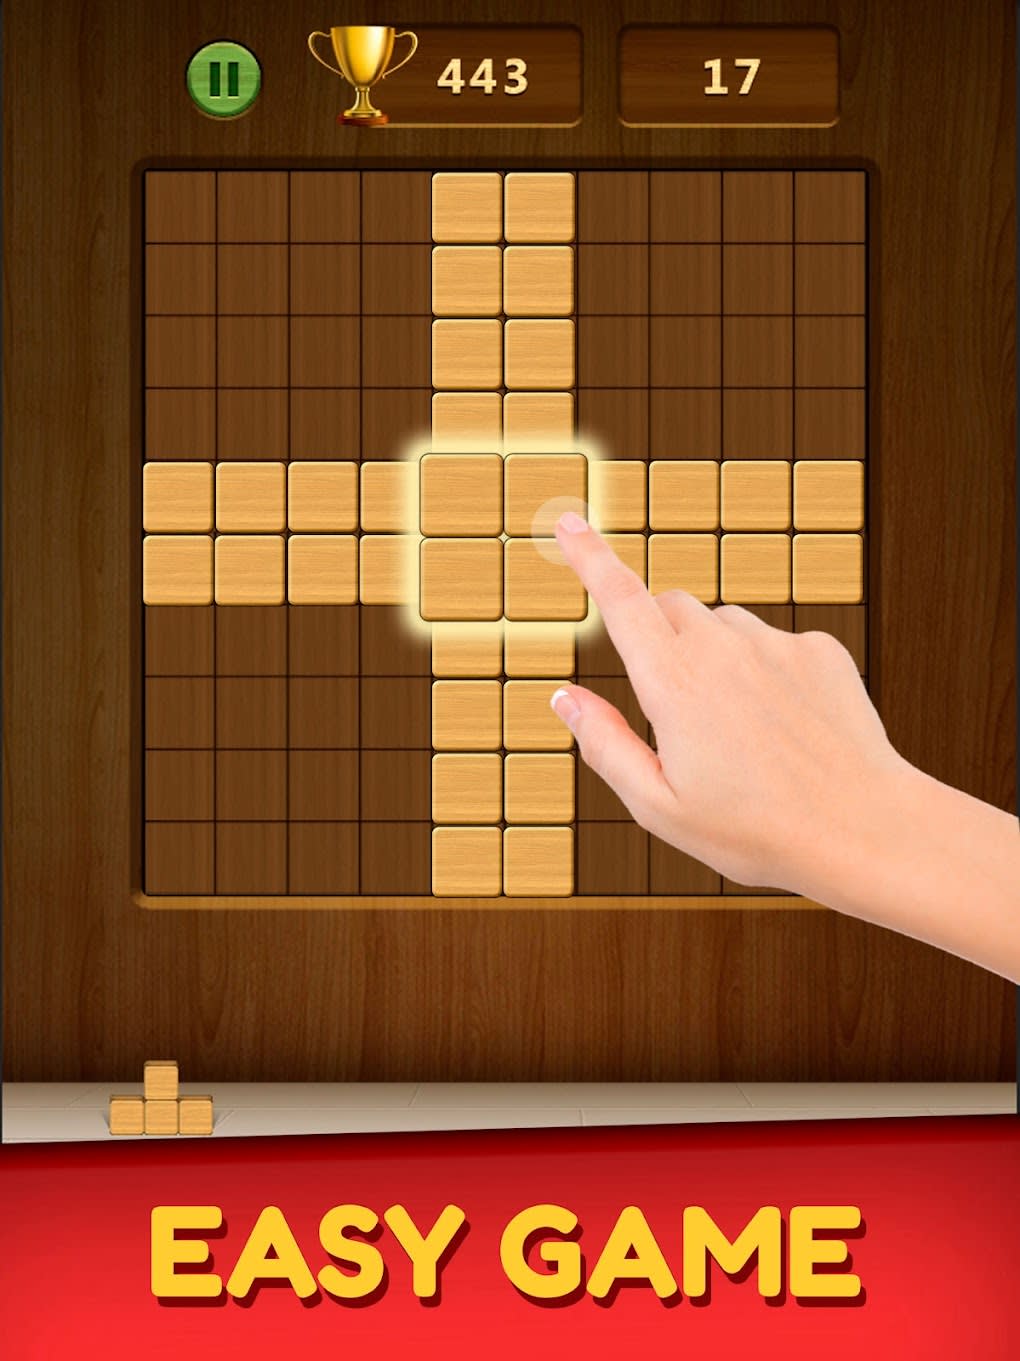 Wood Block Puzzle - Free Classic Block Puzzle Game APK para Android -  Download